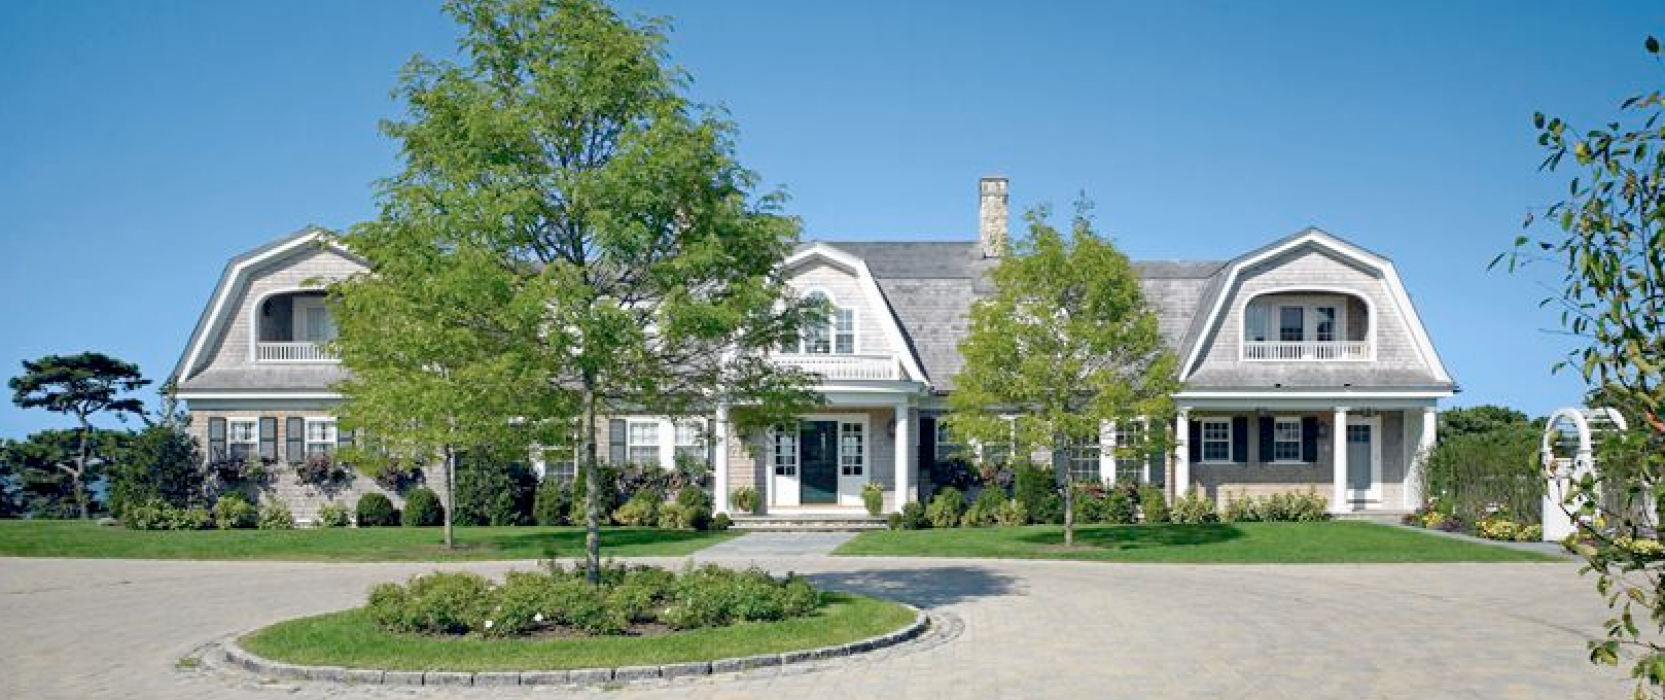 Patrick Ahearn的Edgartown Harbor House是玛莎葡萄园岛2014年最昂贵的房屋销售